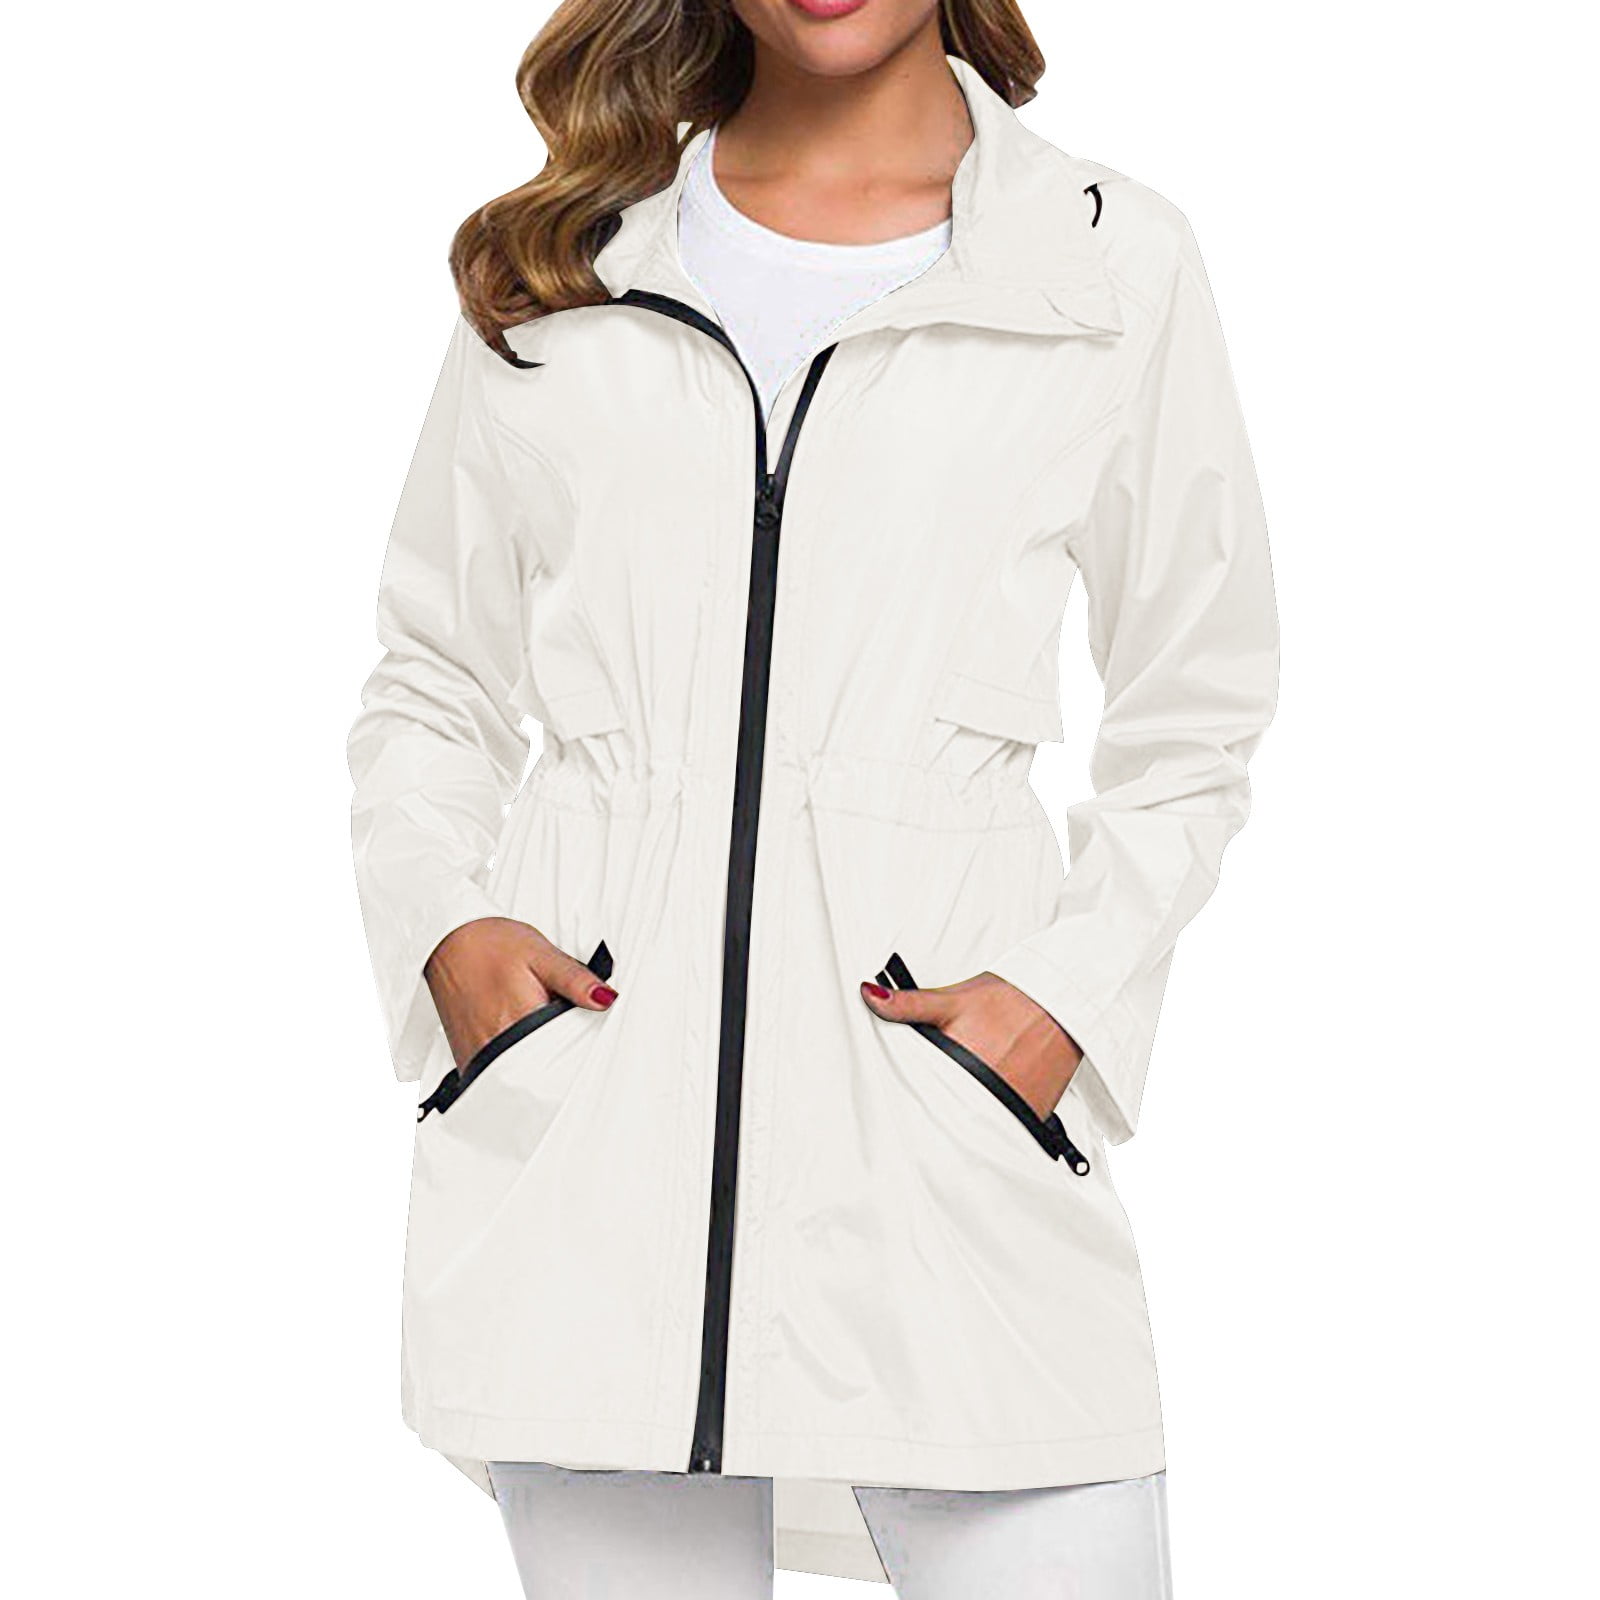 Yilirongyumm White XL Women's One-Piece Women Long Raincoat With